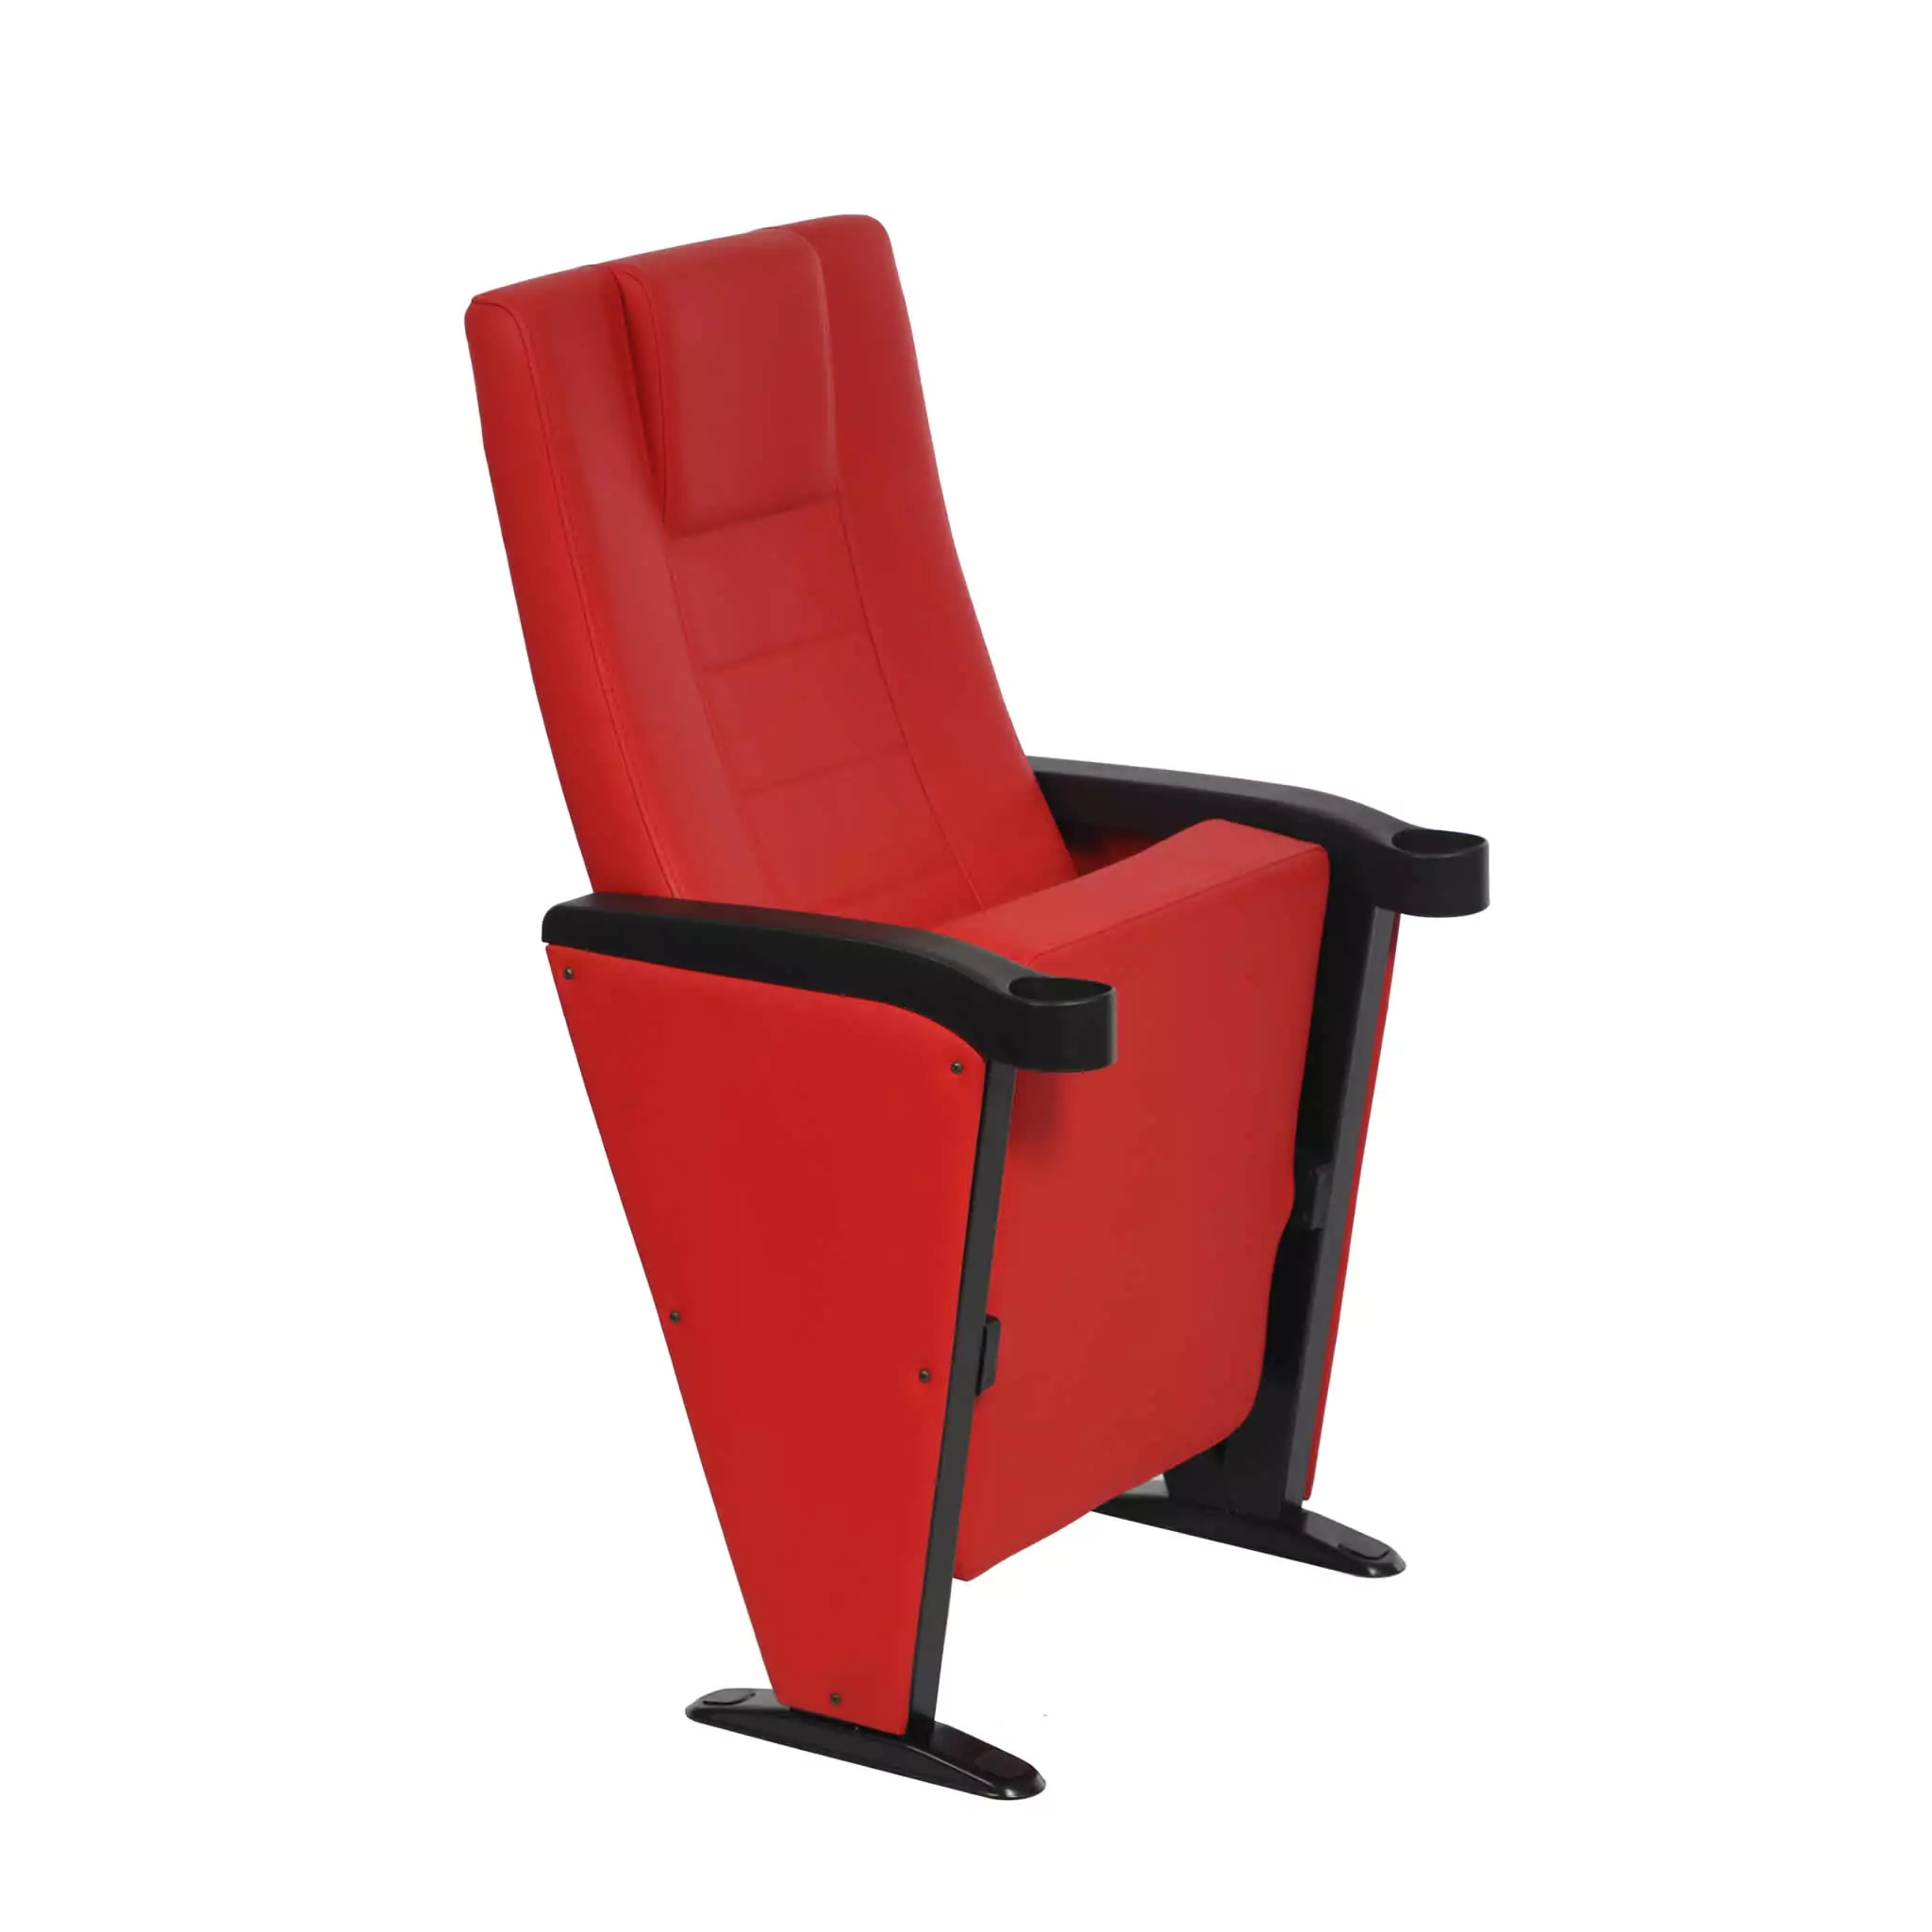 Simko Seating Products Stadium Seat Safir V Premium